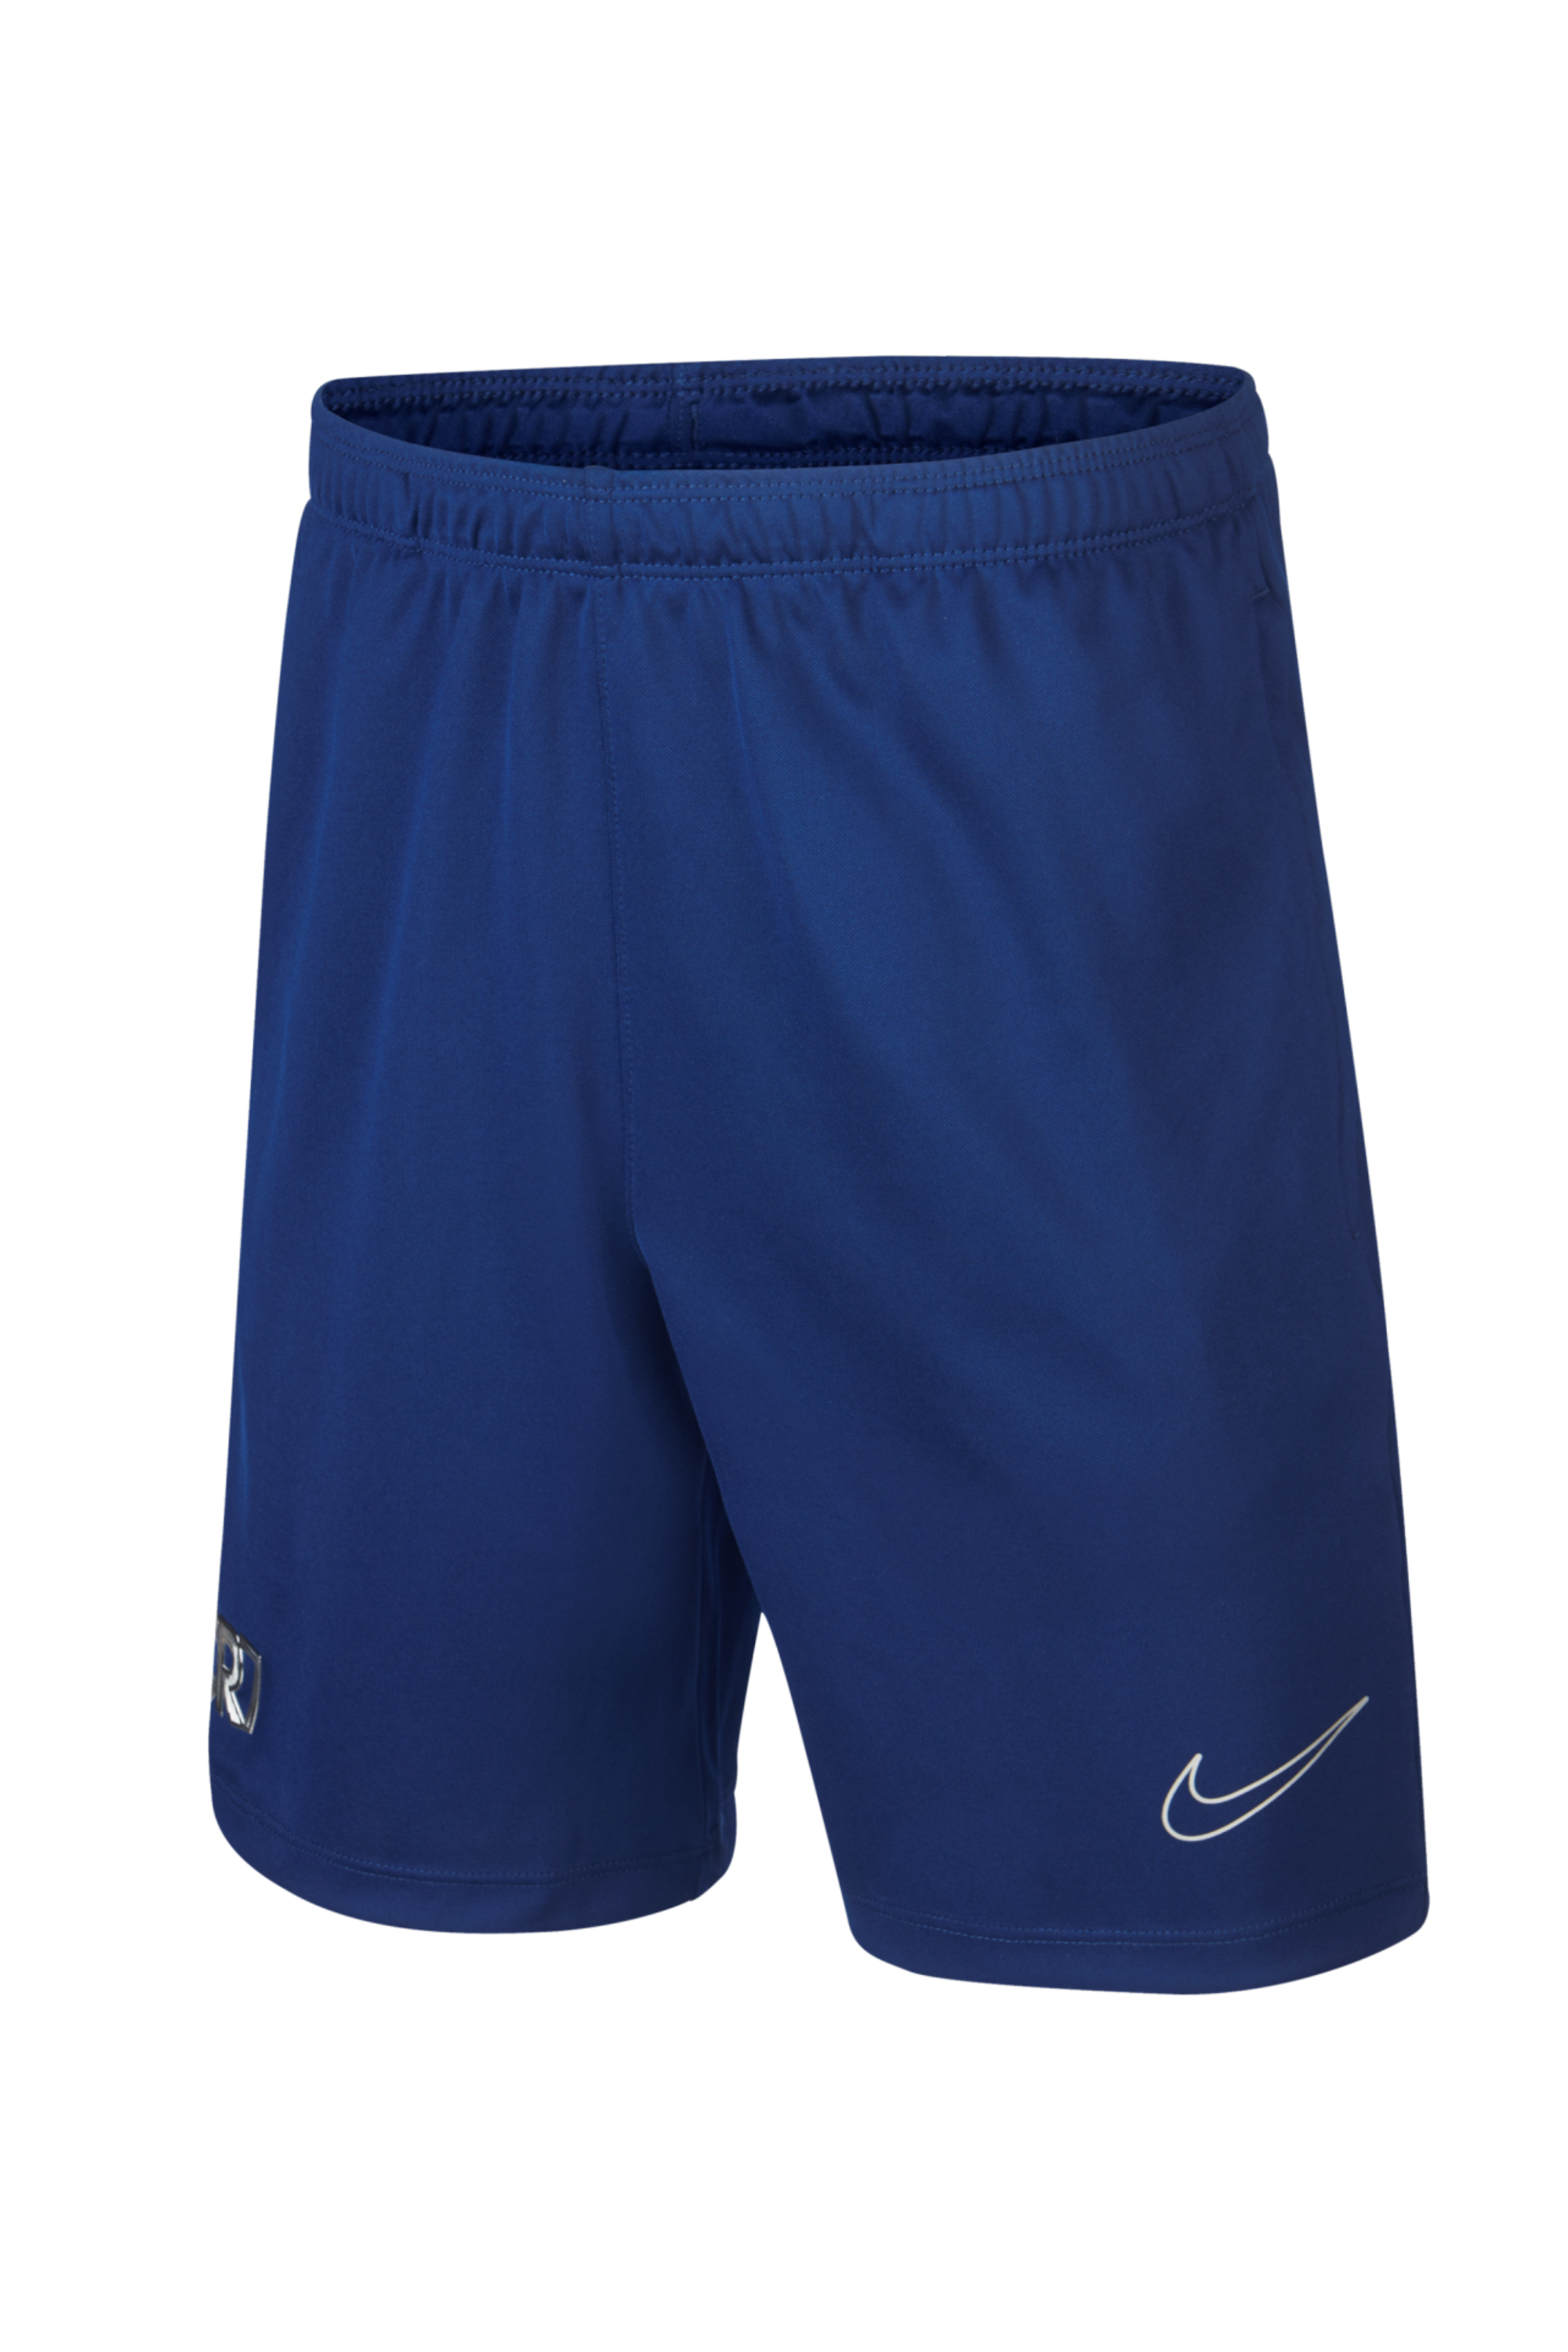 Shorts Nike CR7 Dry Junior | R-GOL.com 